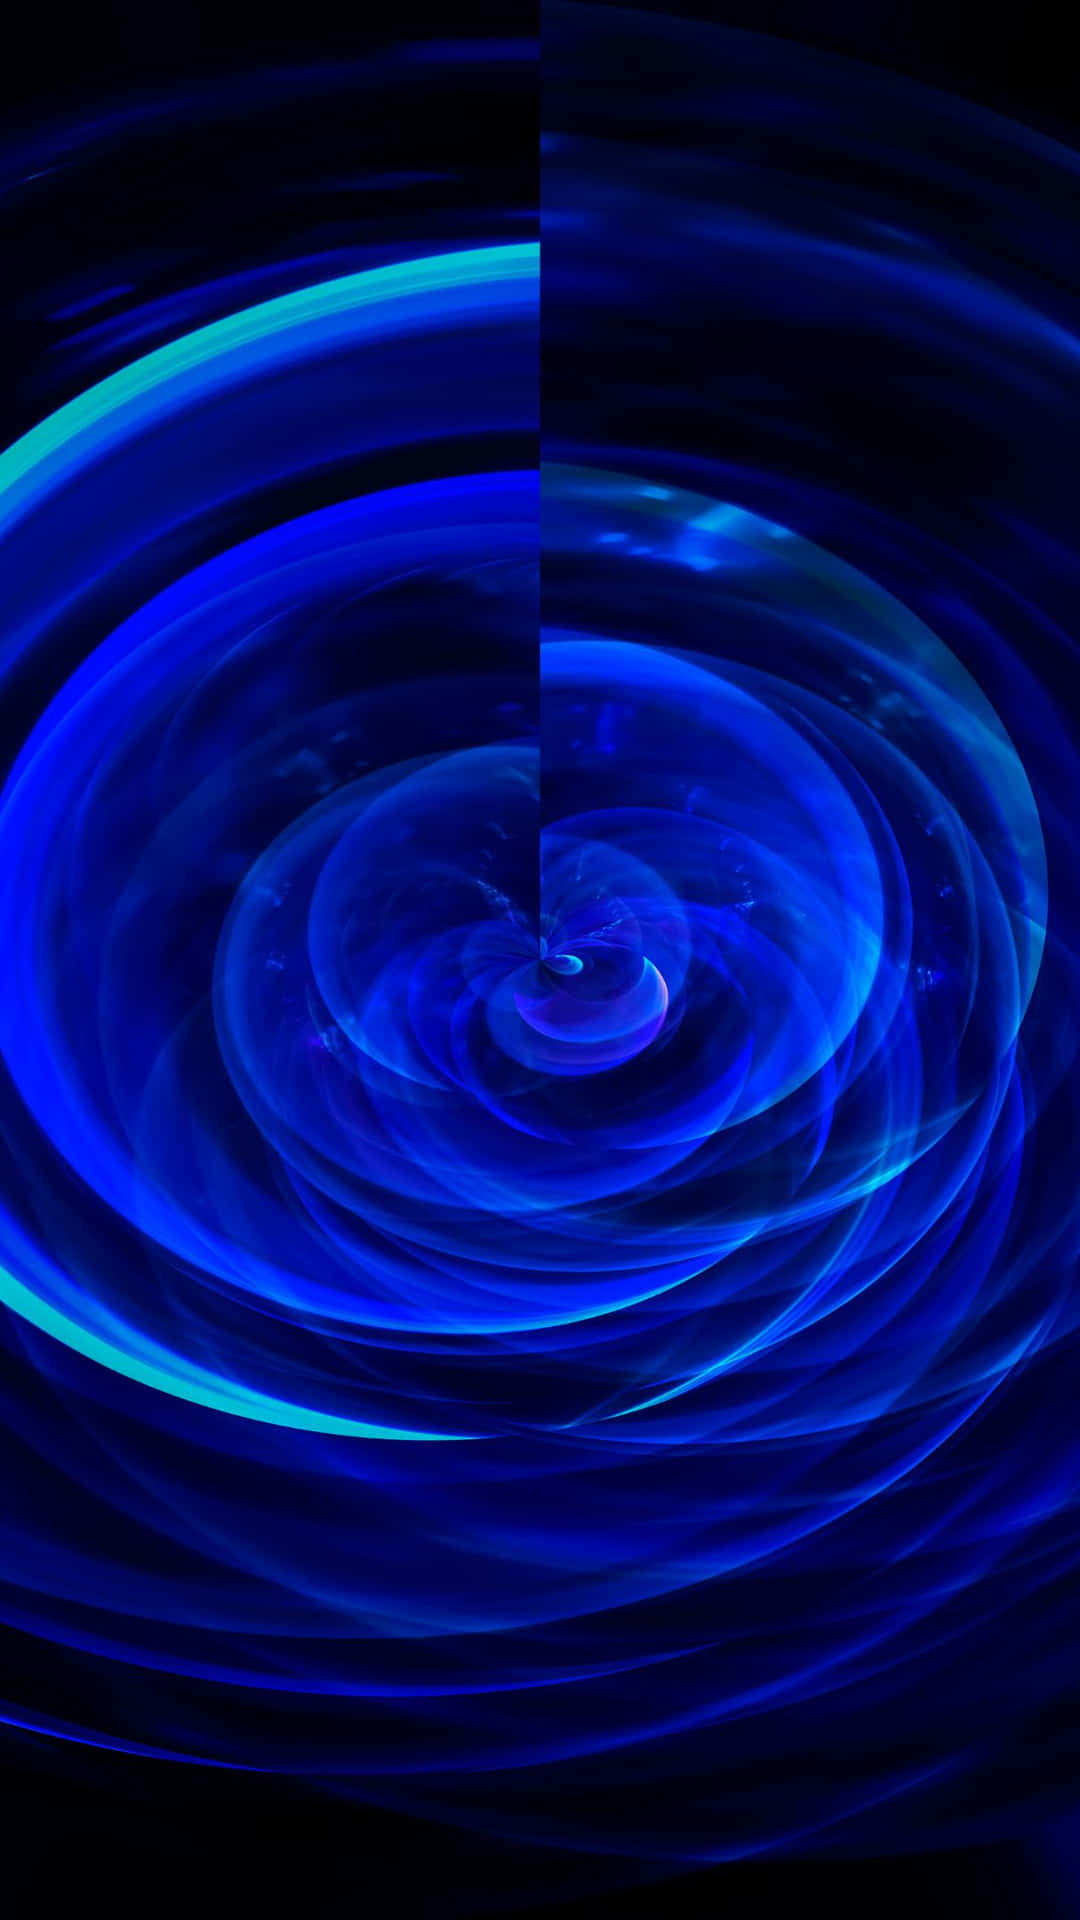 Bright and Beautiful Blue Swirl